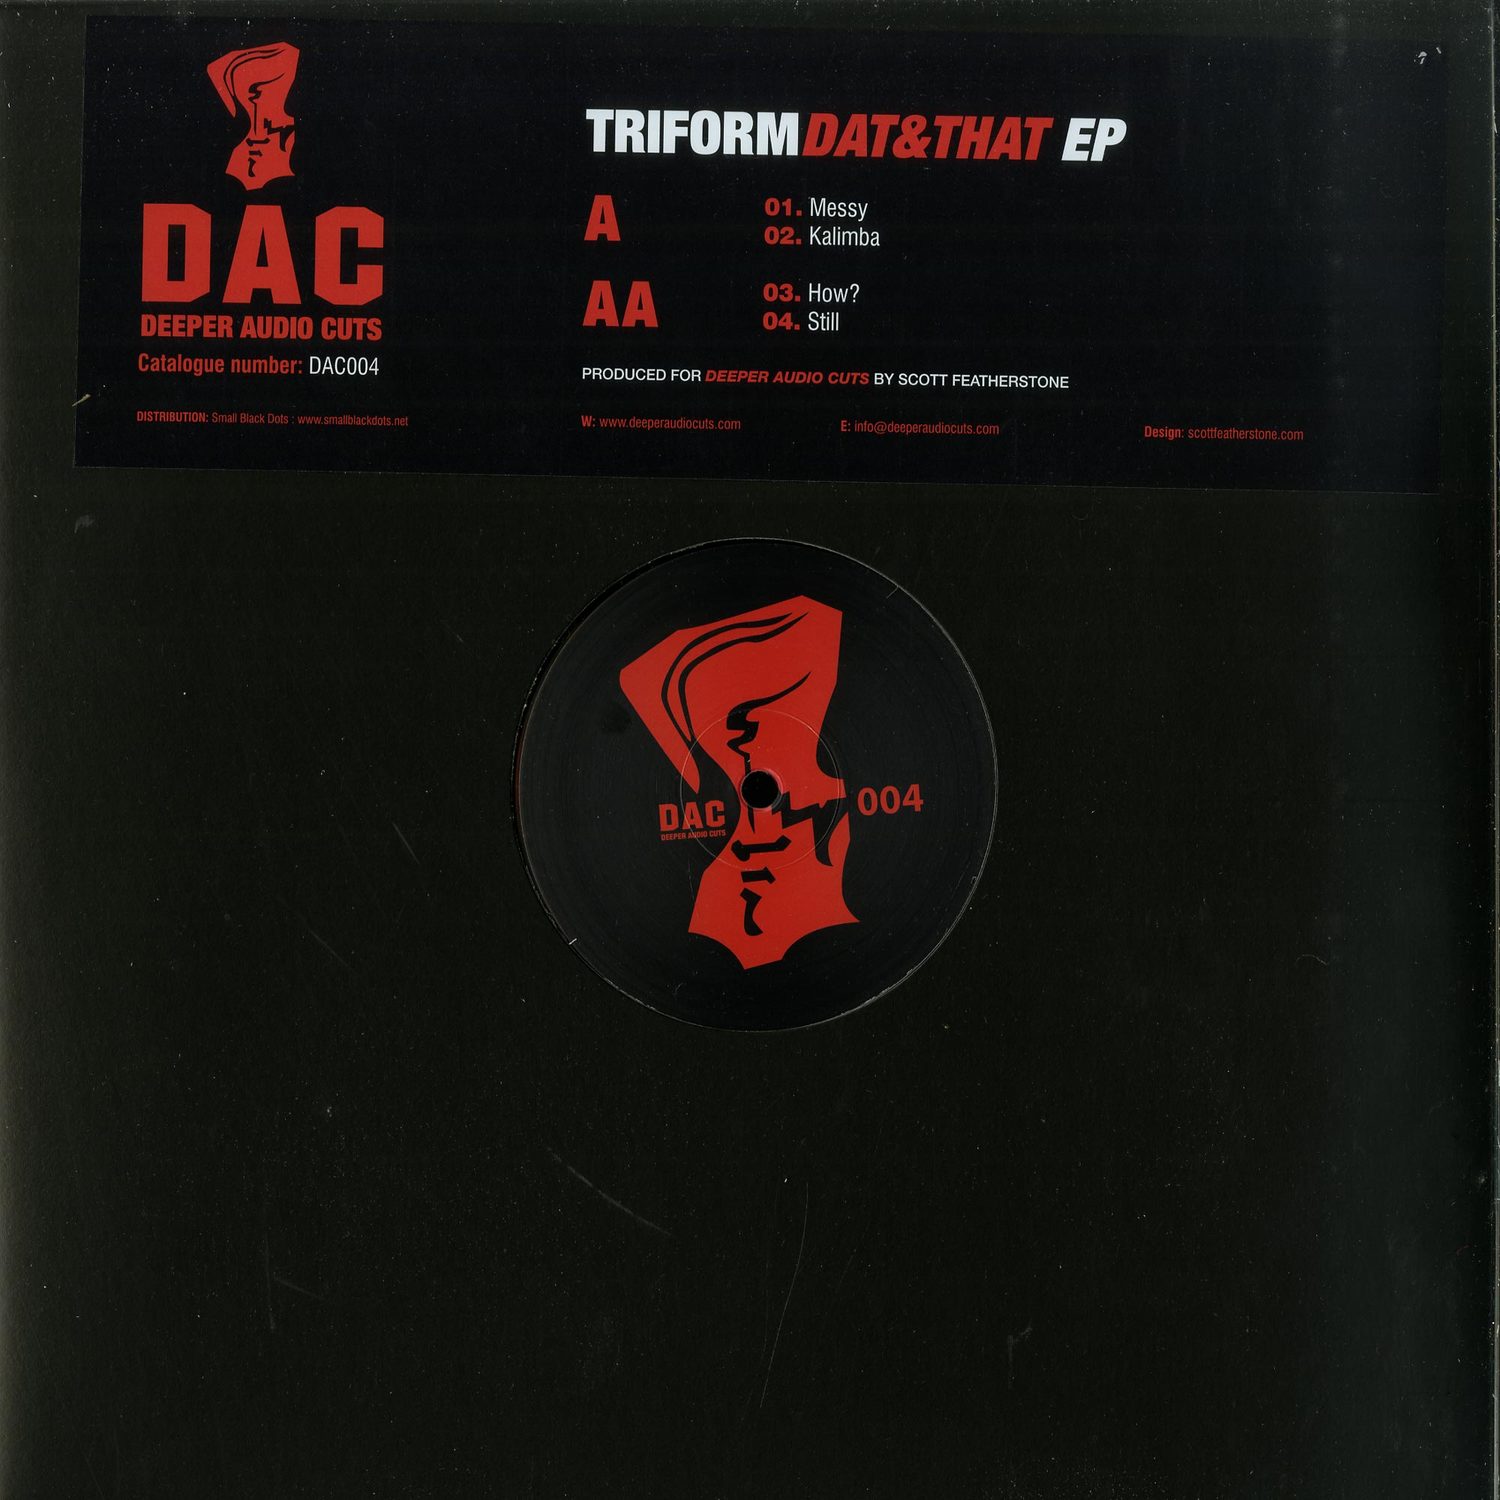 Triform - DAT & THAT EP